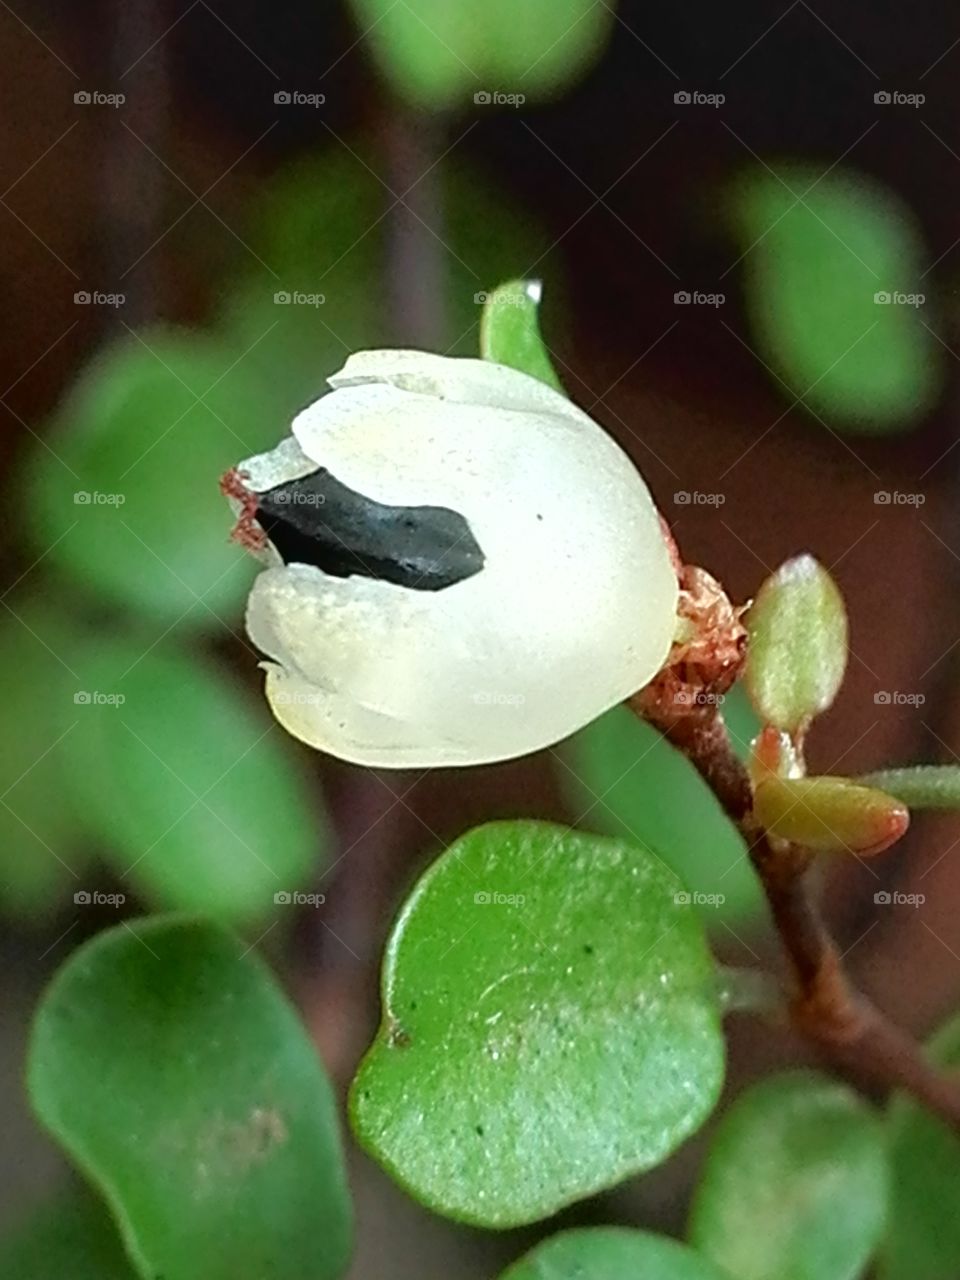 Wireplant (muehlenbeckia) seed